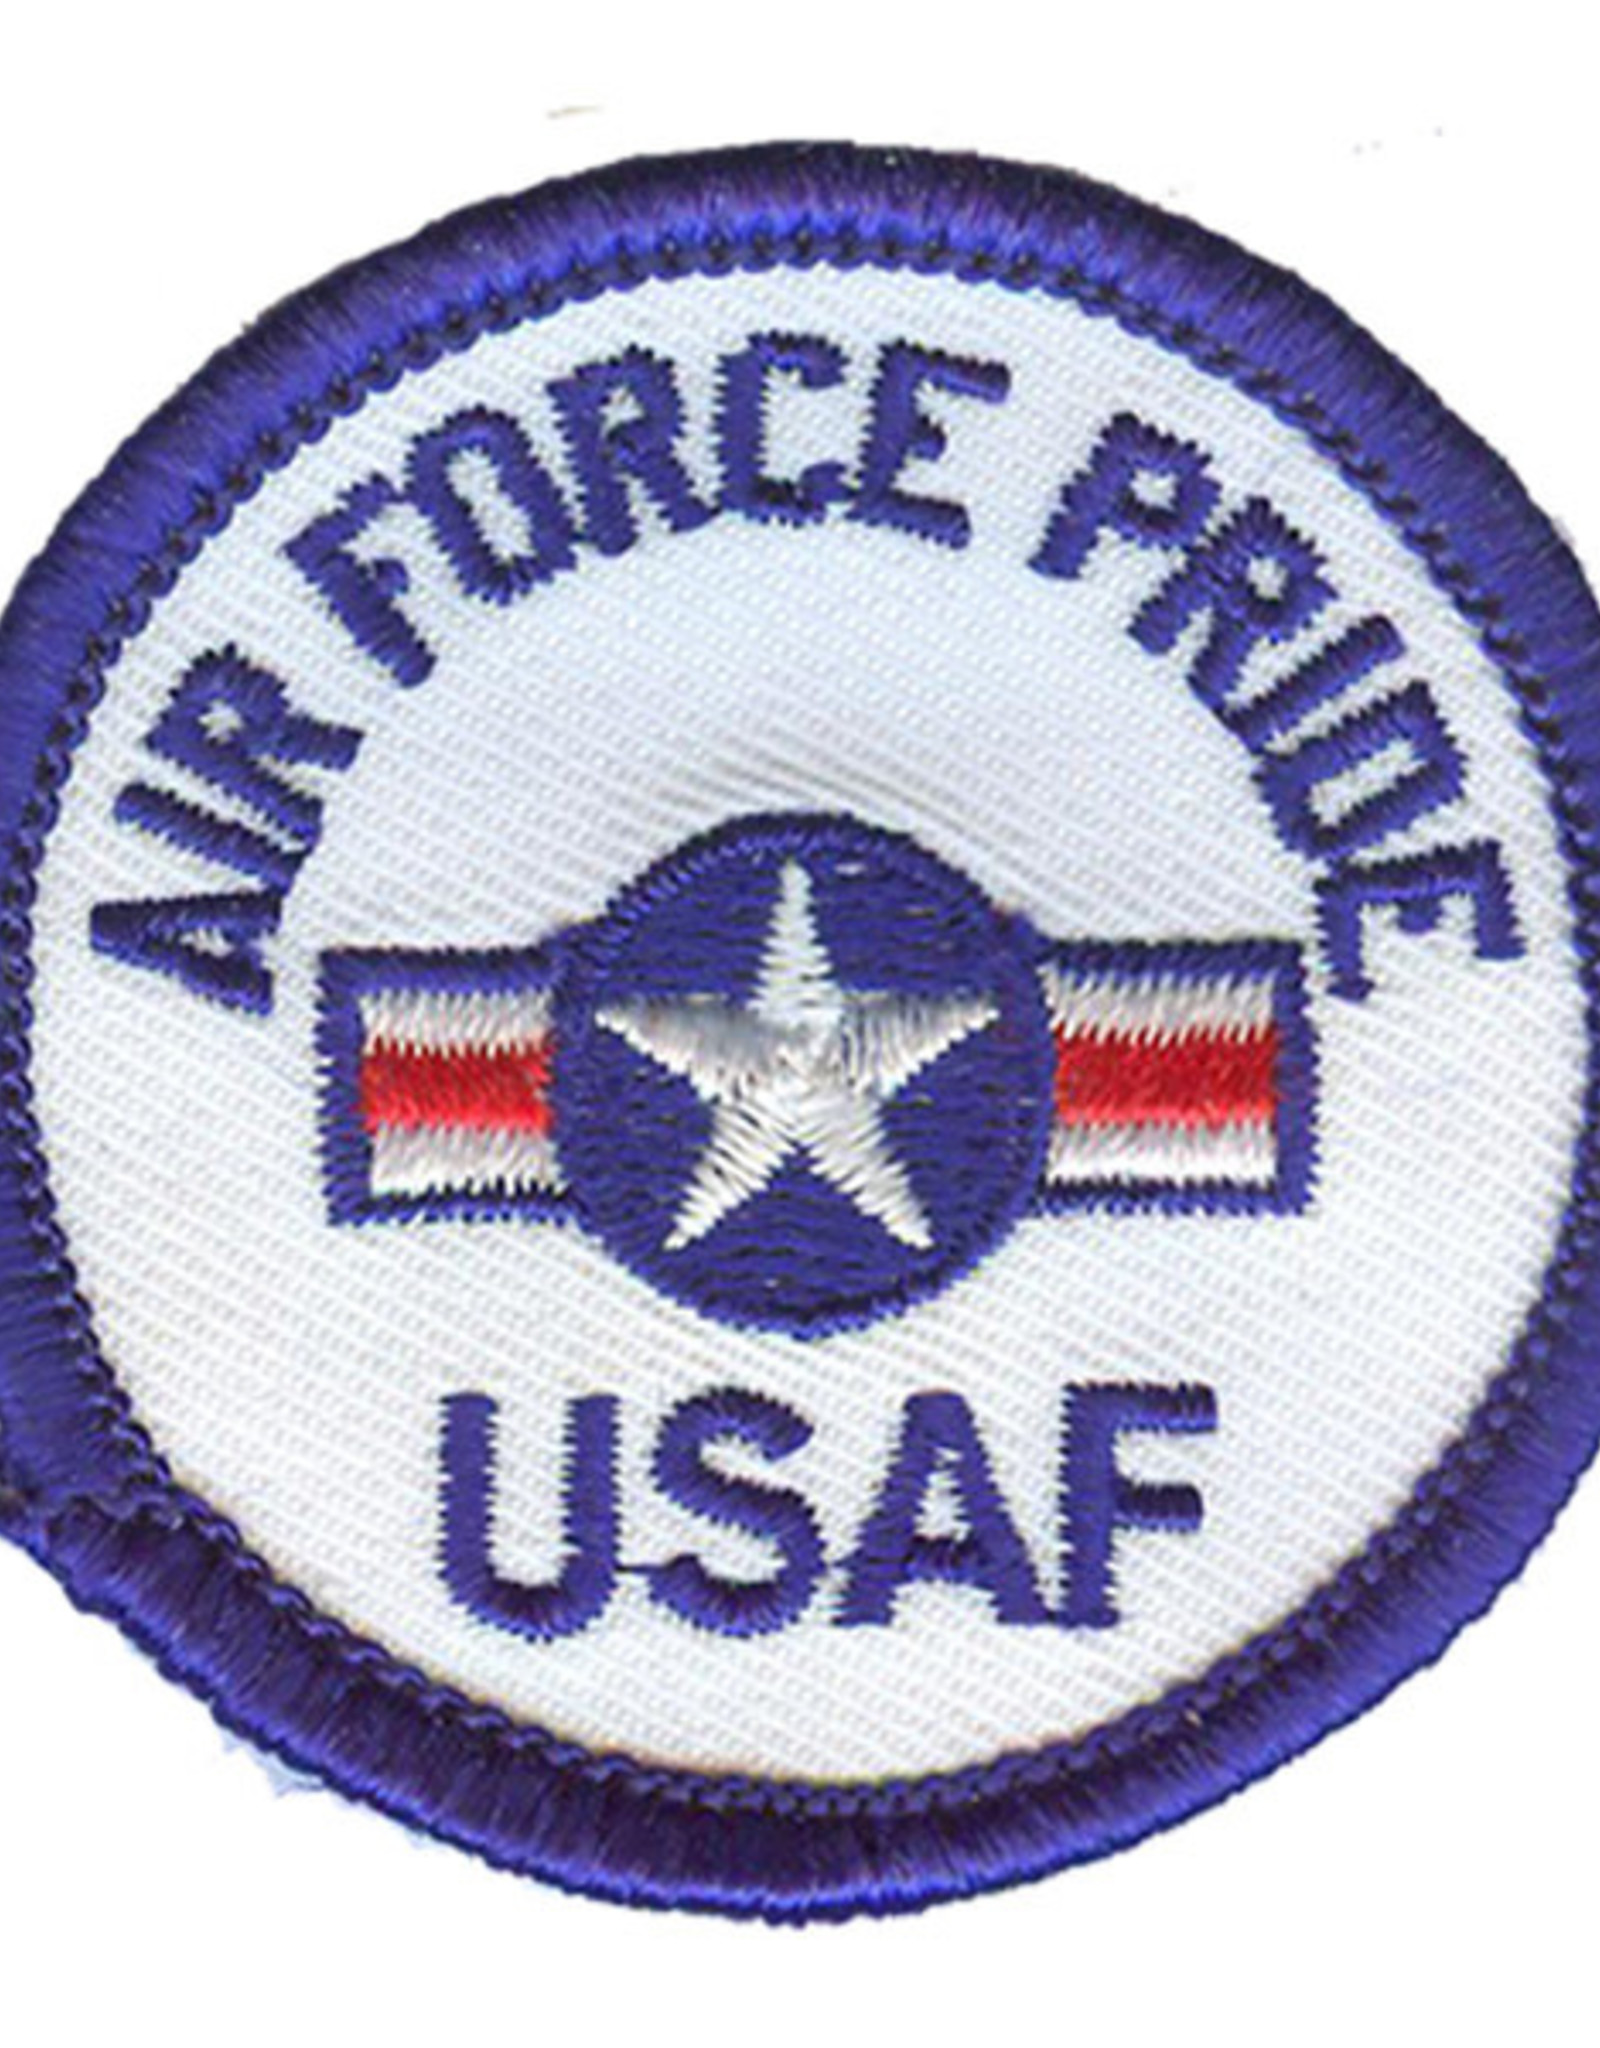 *Air Force Pride Fun Patch